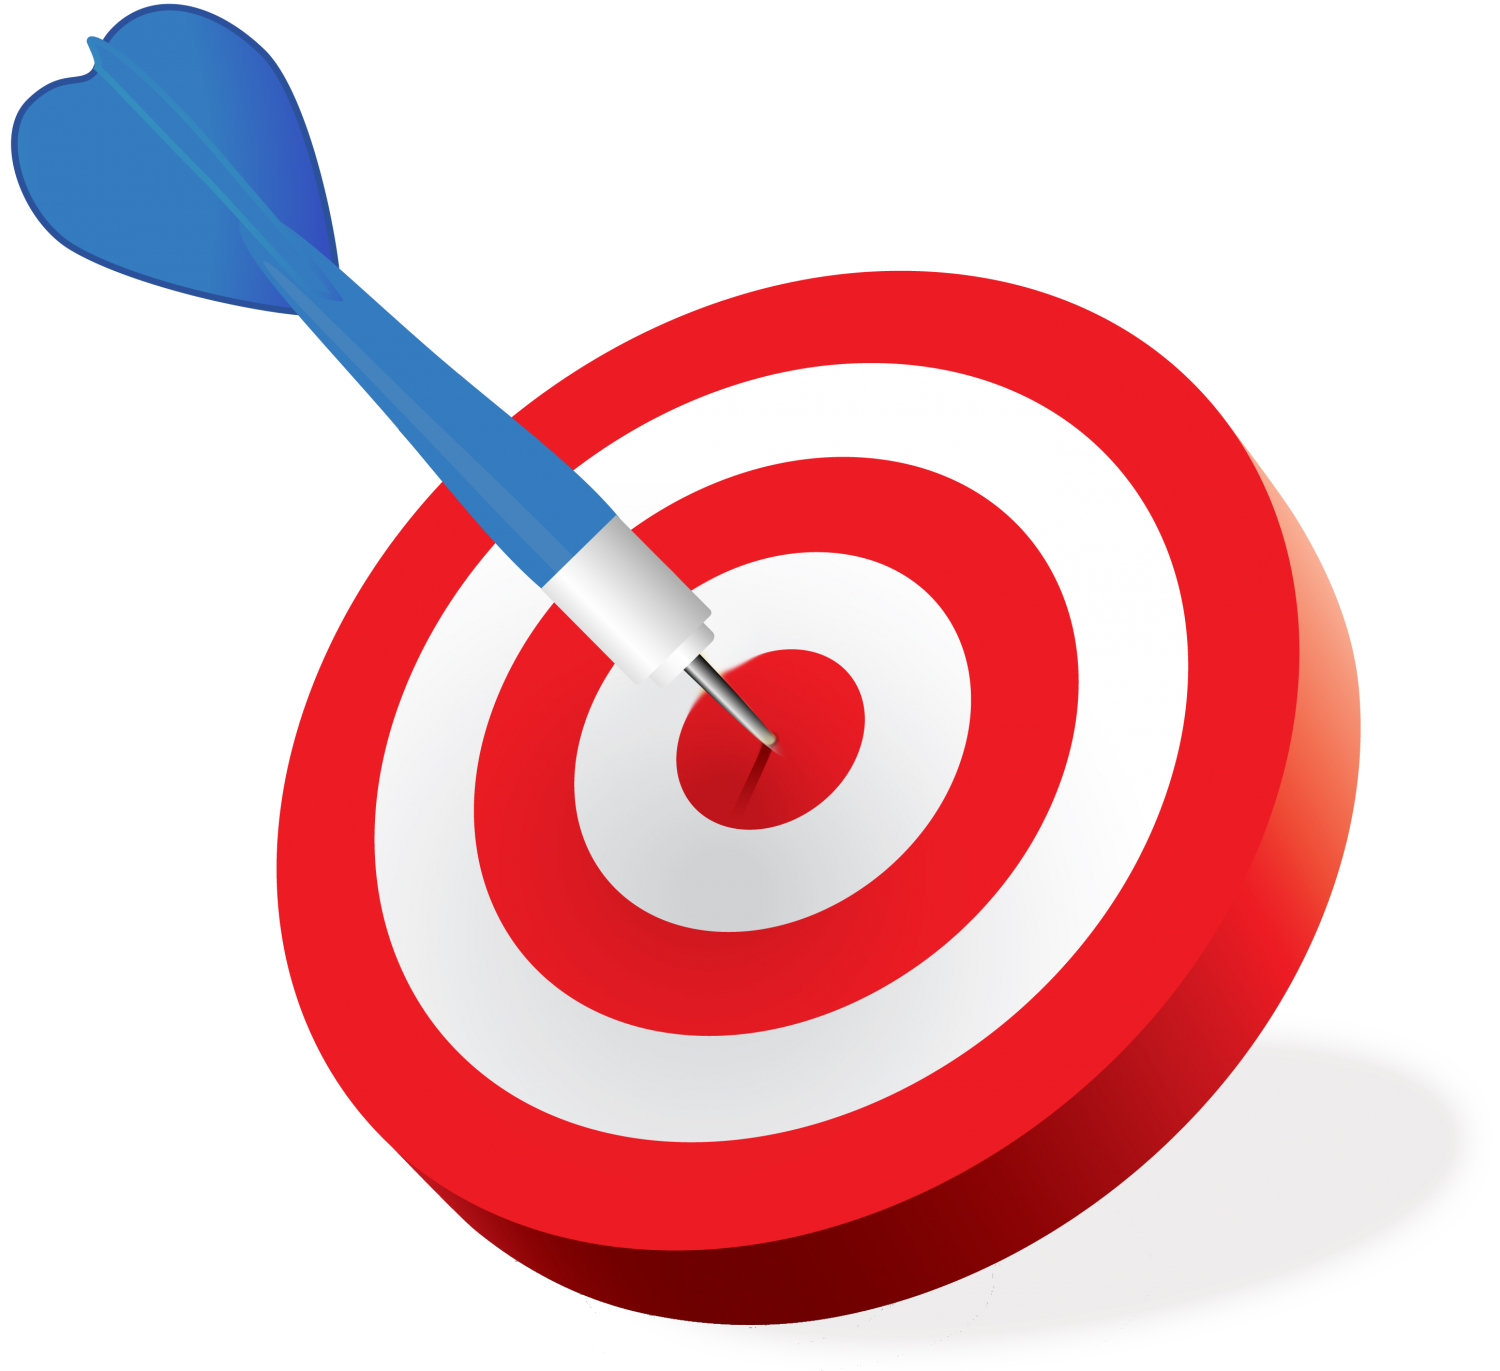 goal-shooting-target-clip-art-goal-png-download-1500-1371-free